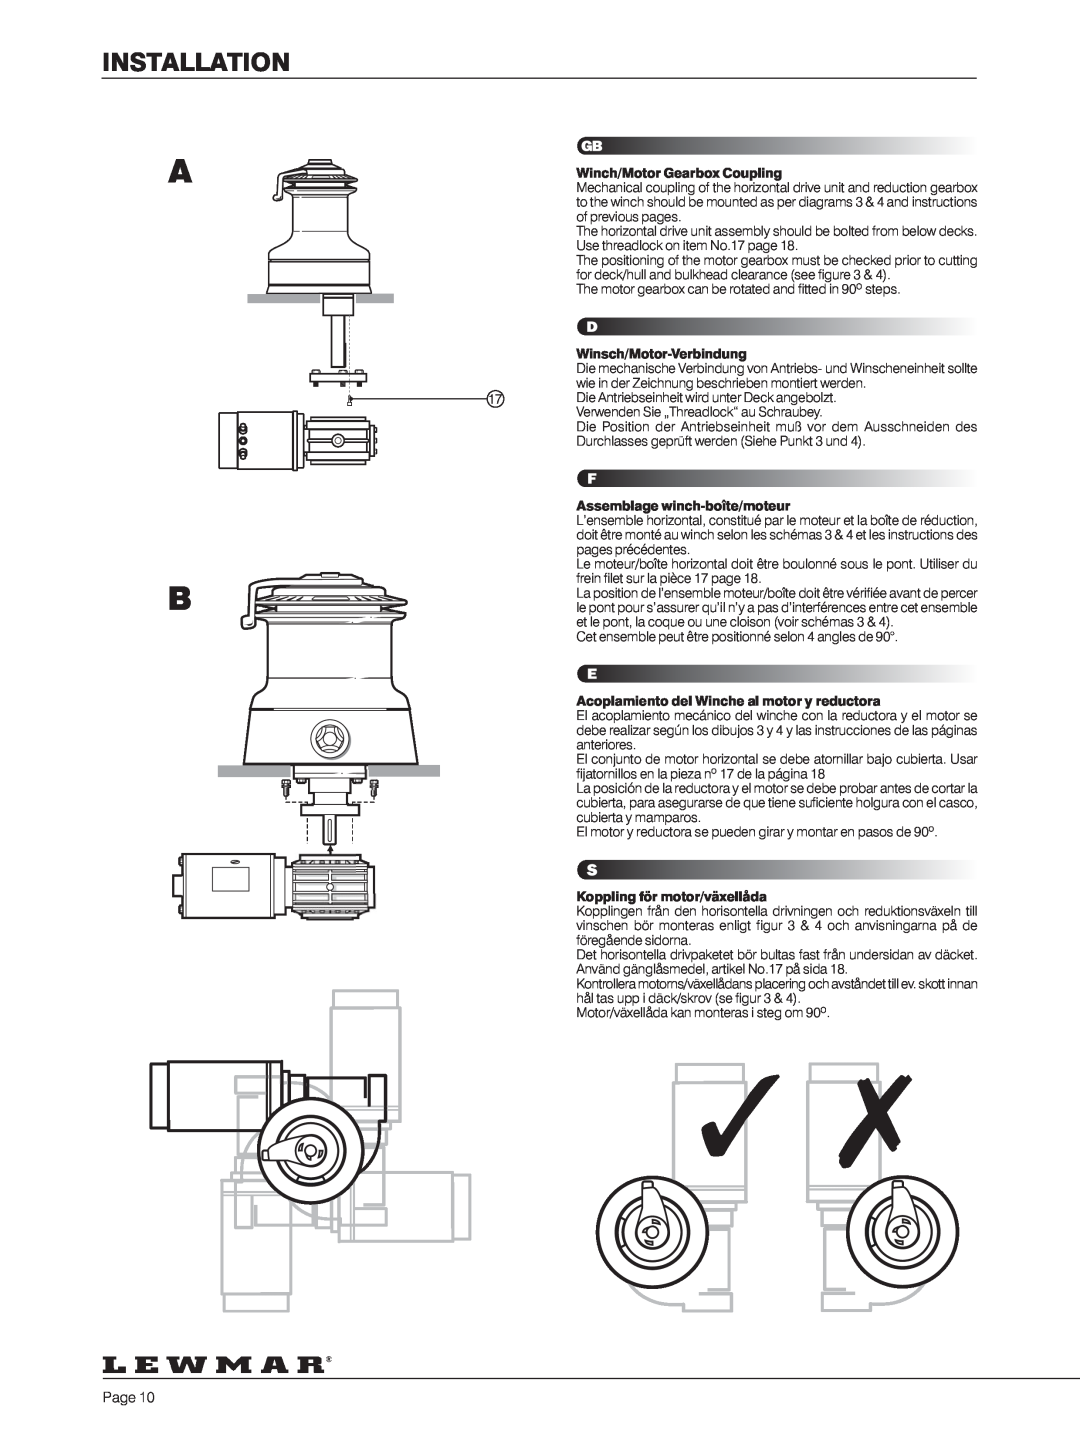 Lewmar 40-111 manual Installation, Winch/Motor Gearbox Coupling, Winsch/Motor-Verbindung, Assemblage winch-boîte/moteur 